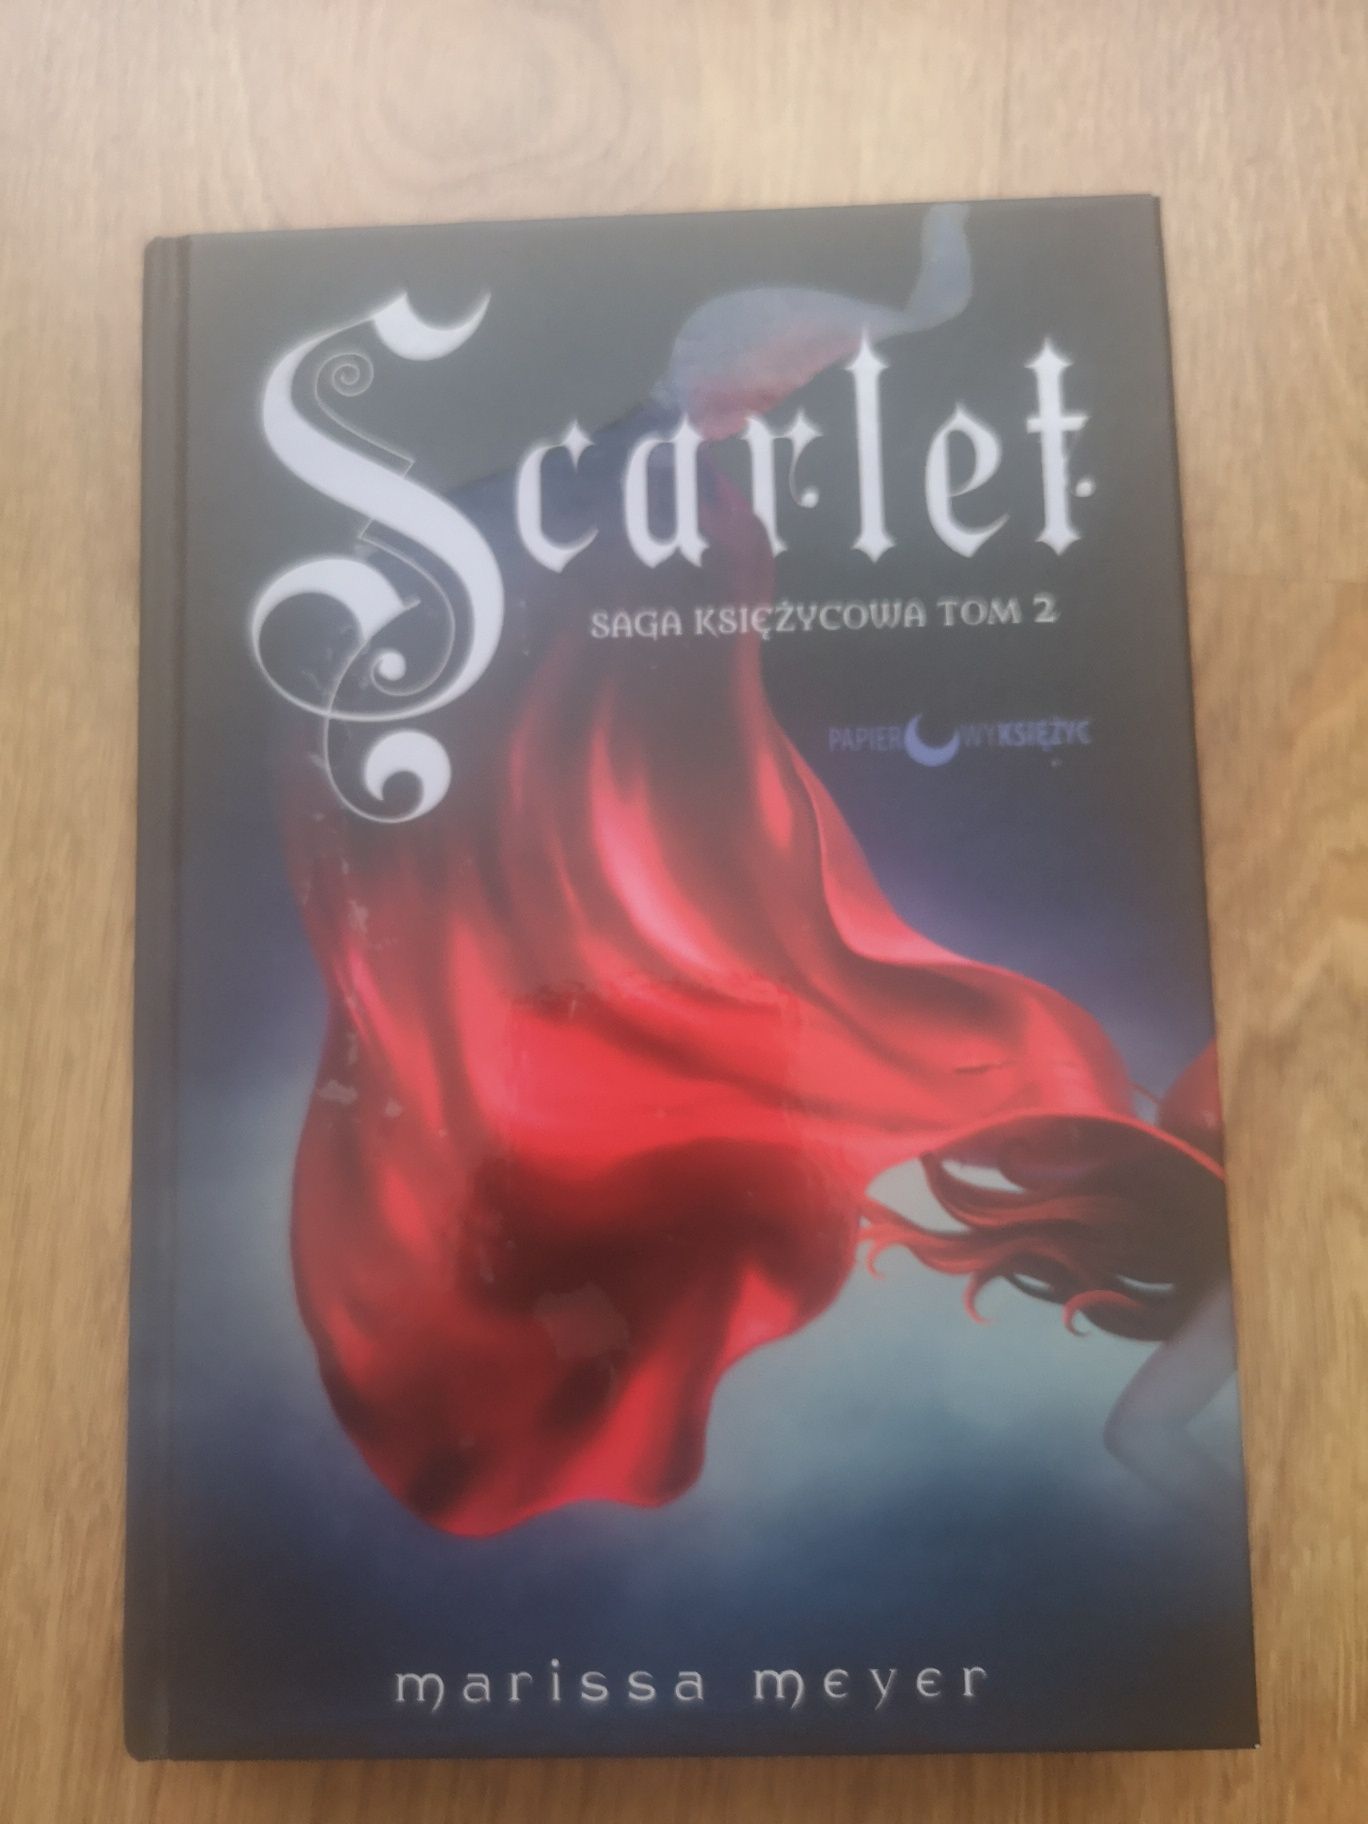 Scarlet saga księżycowa tom 2 Marissa Meyer